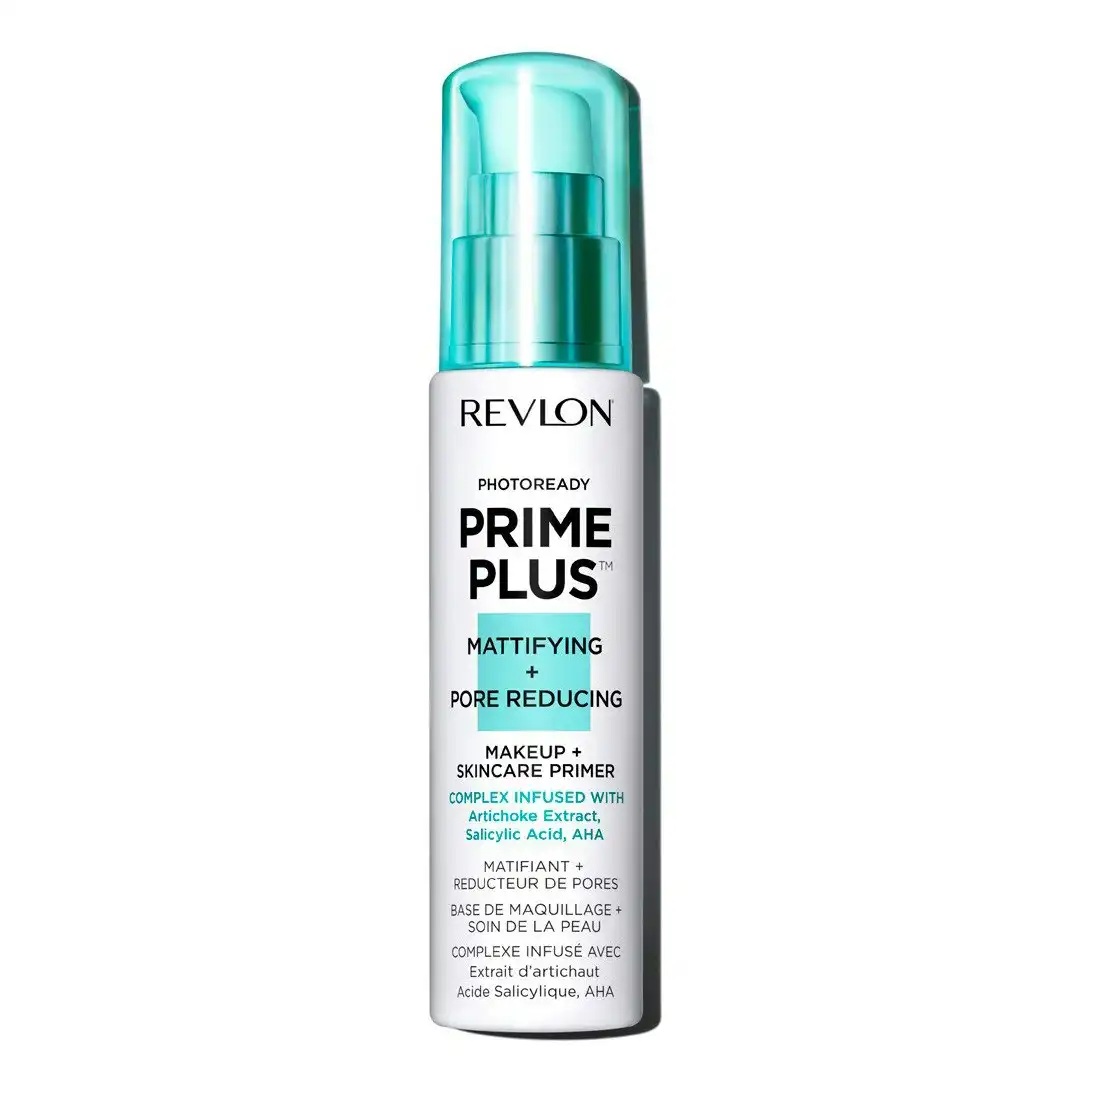 Revlon Prime Plus Mattifying + Pore Reducing Makeup + Skincare Primer 30ml